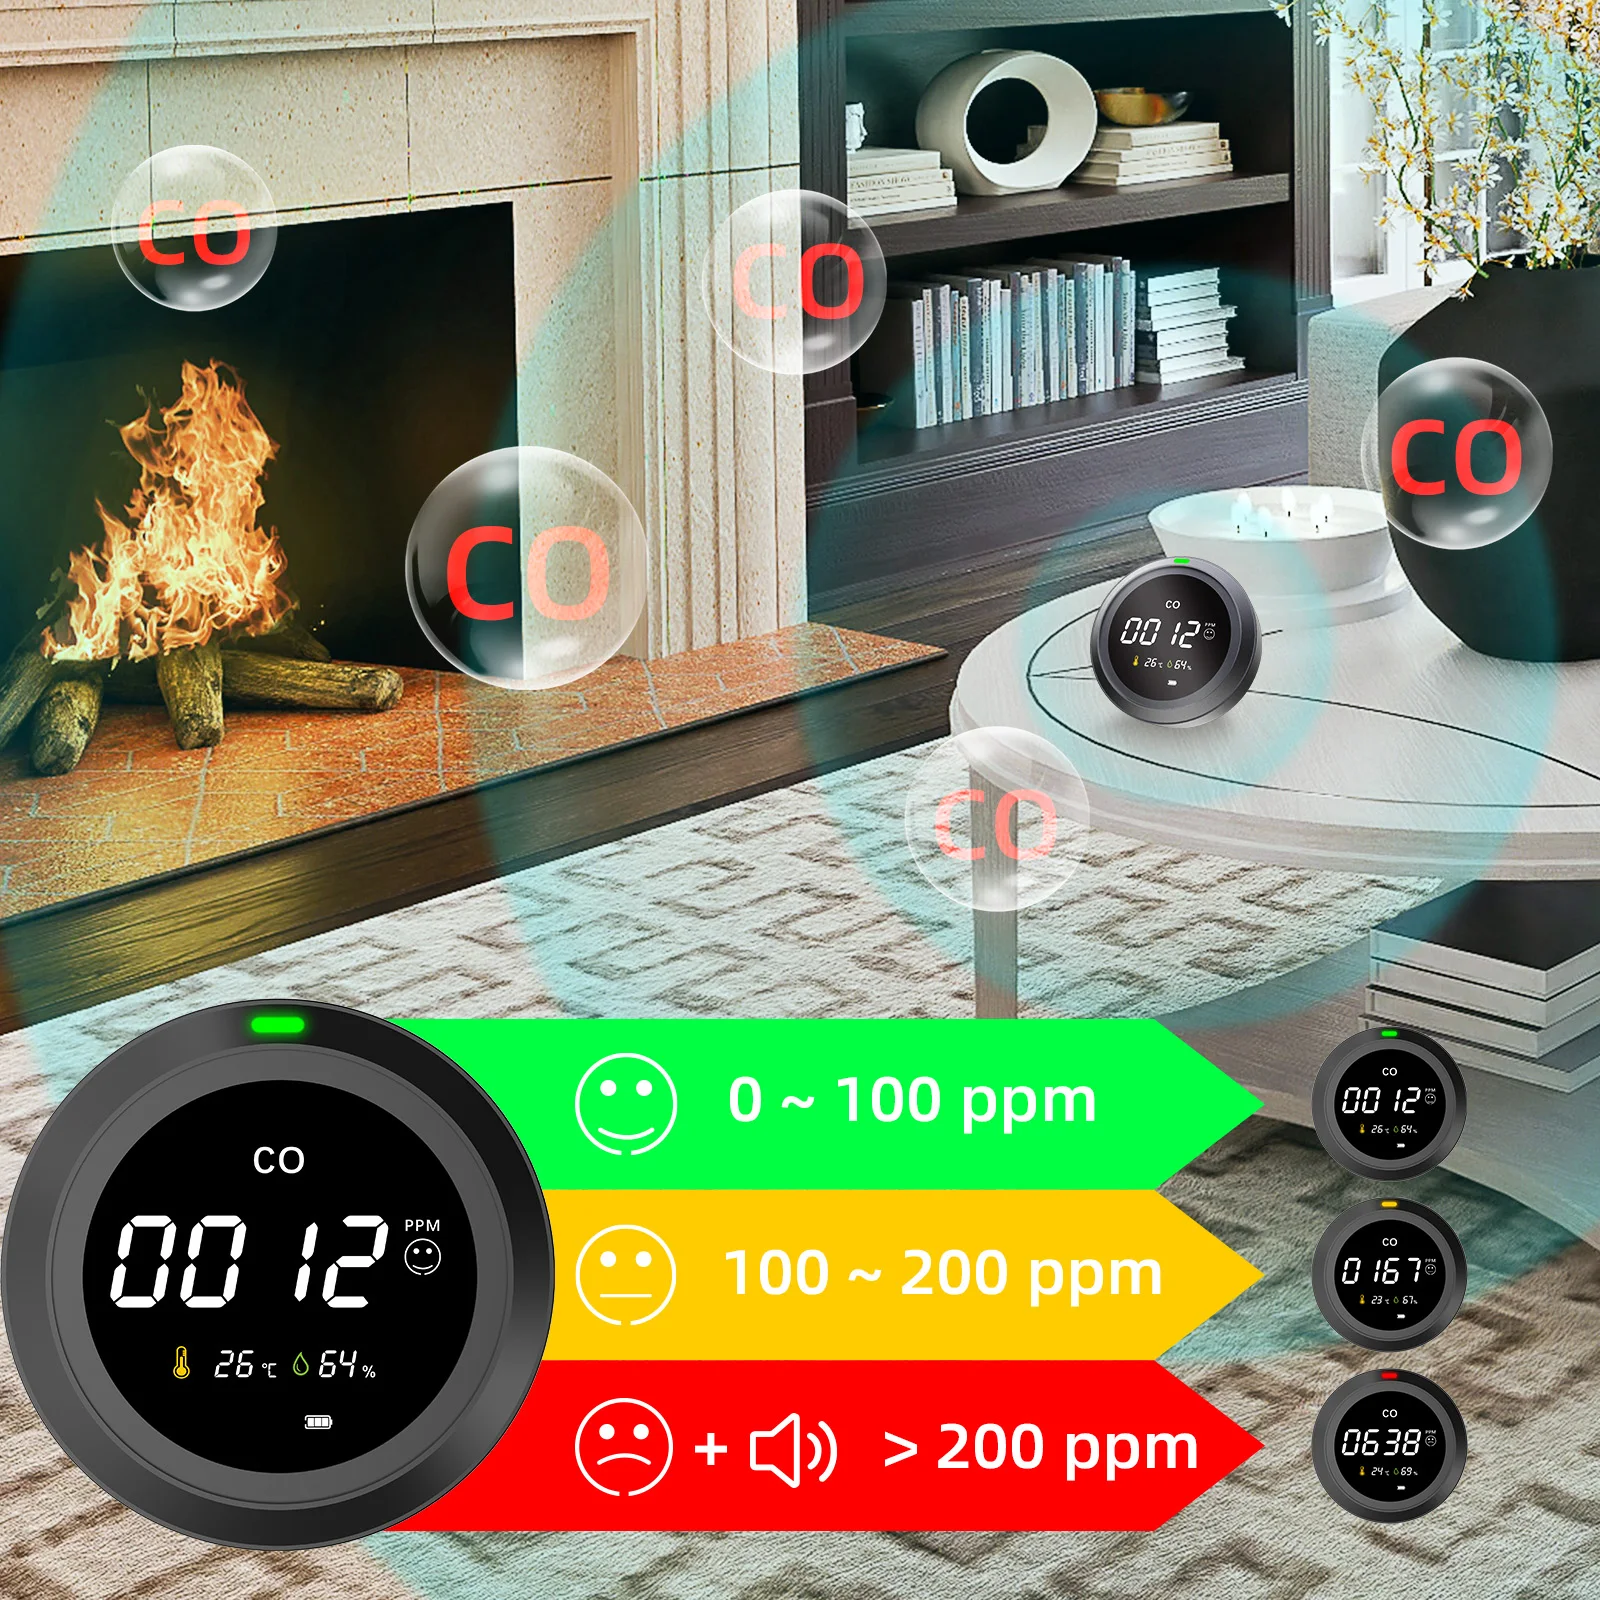 PROTMEX 2 in 1 CO Alarm Warning Detector pilot light Carbon Monoxide Coal Wood Smock Sensor for Home Industry Security PTH-12 images - 6